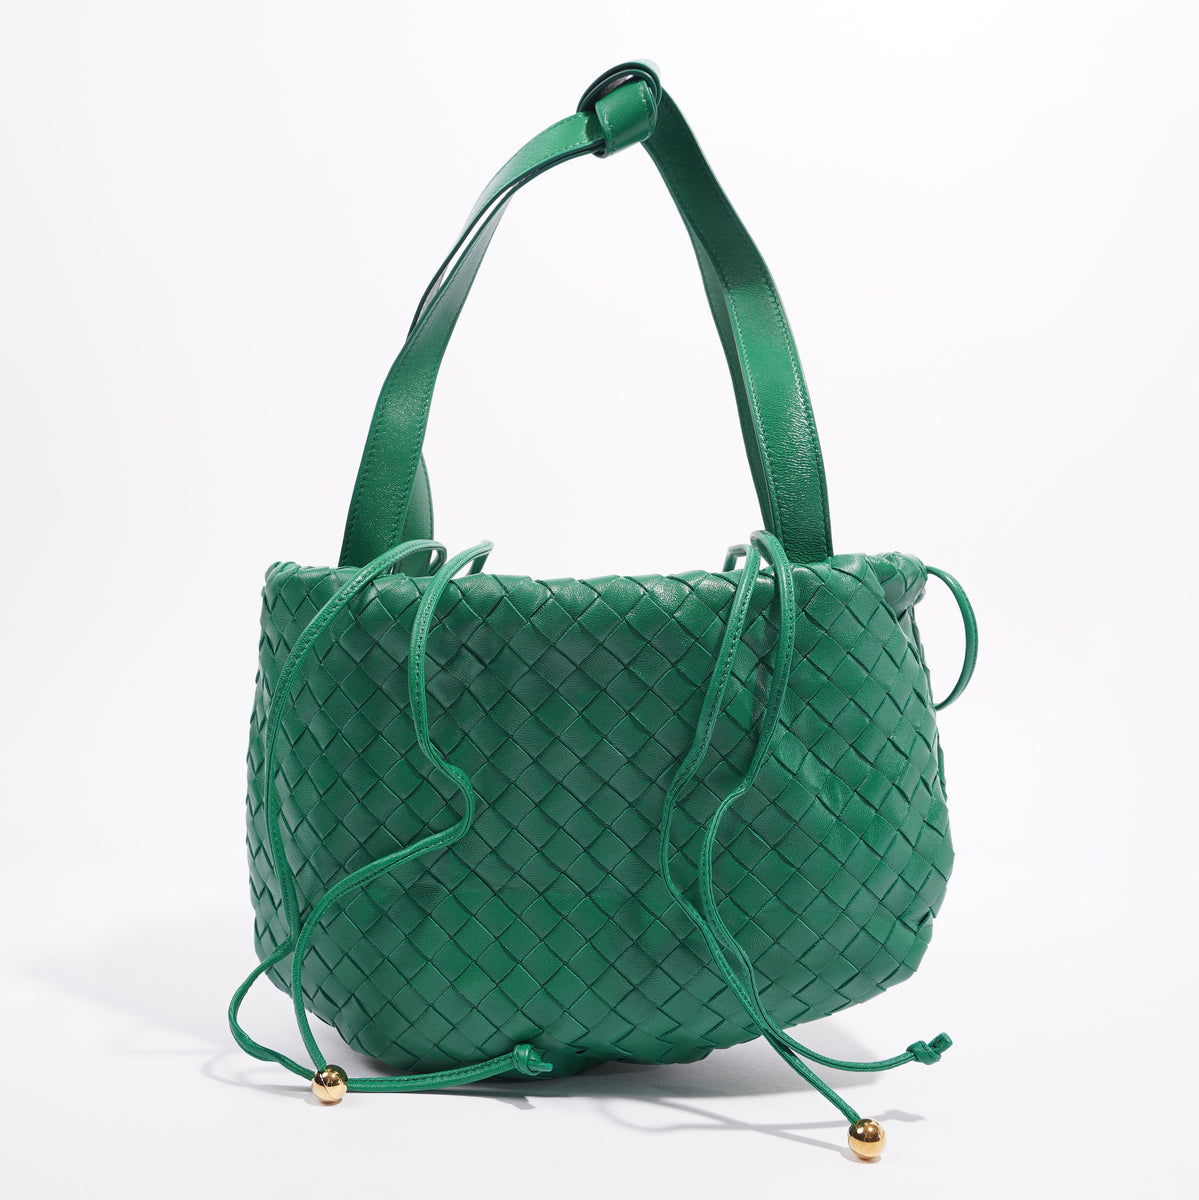 Bottega Veneta Intrecciato Leather Shoulder Bag, Bag, Green - Black